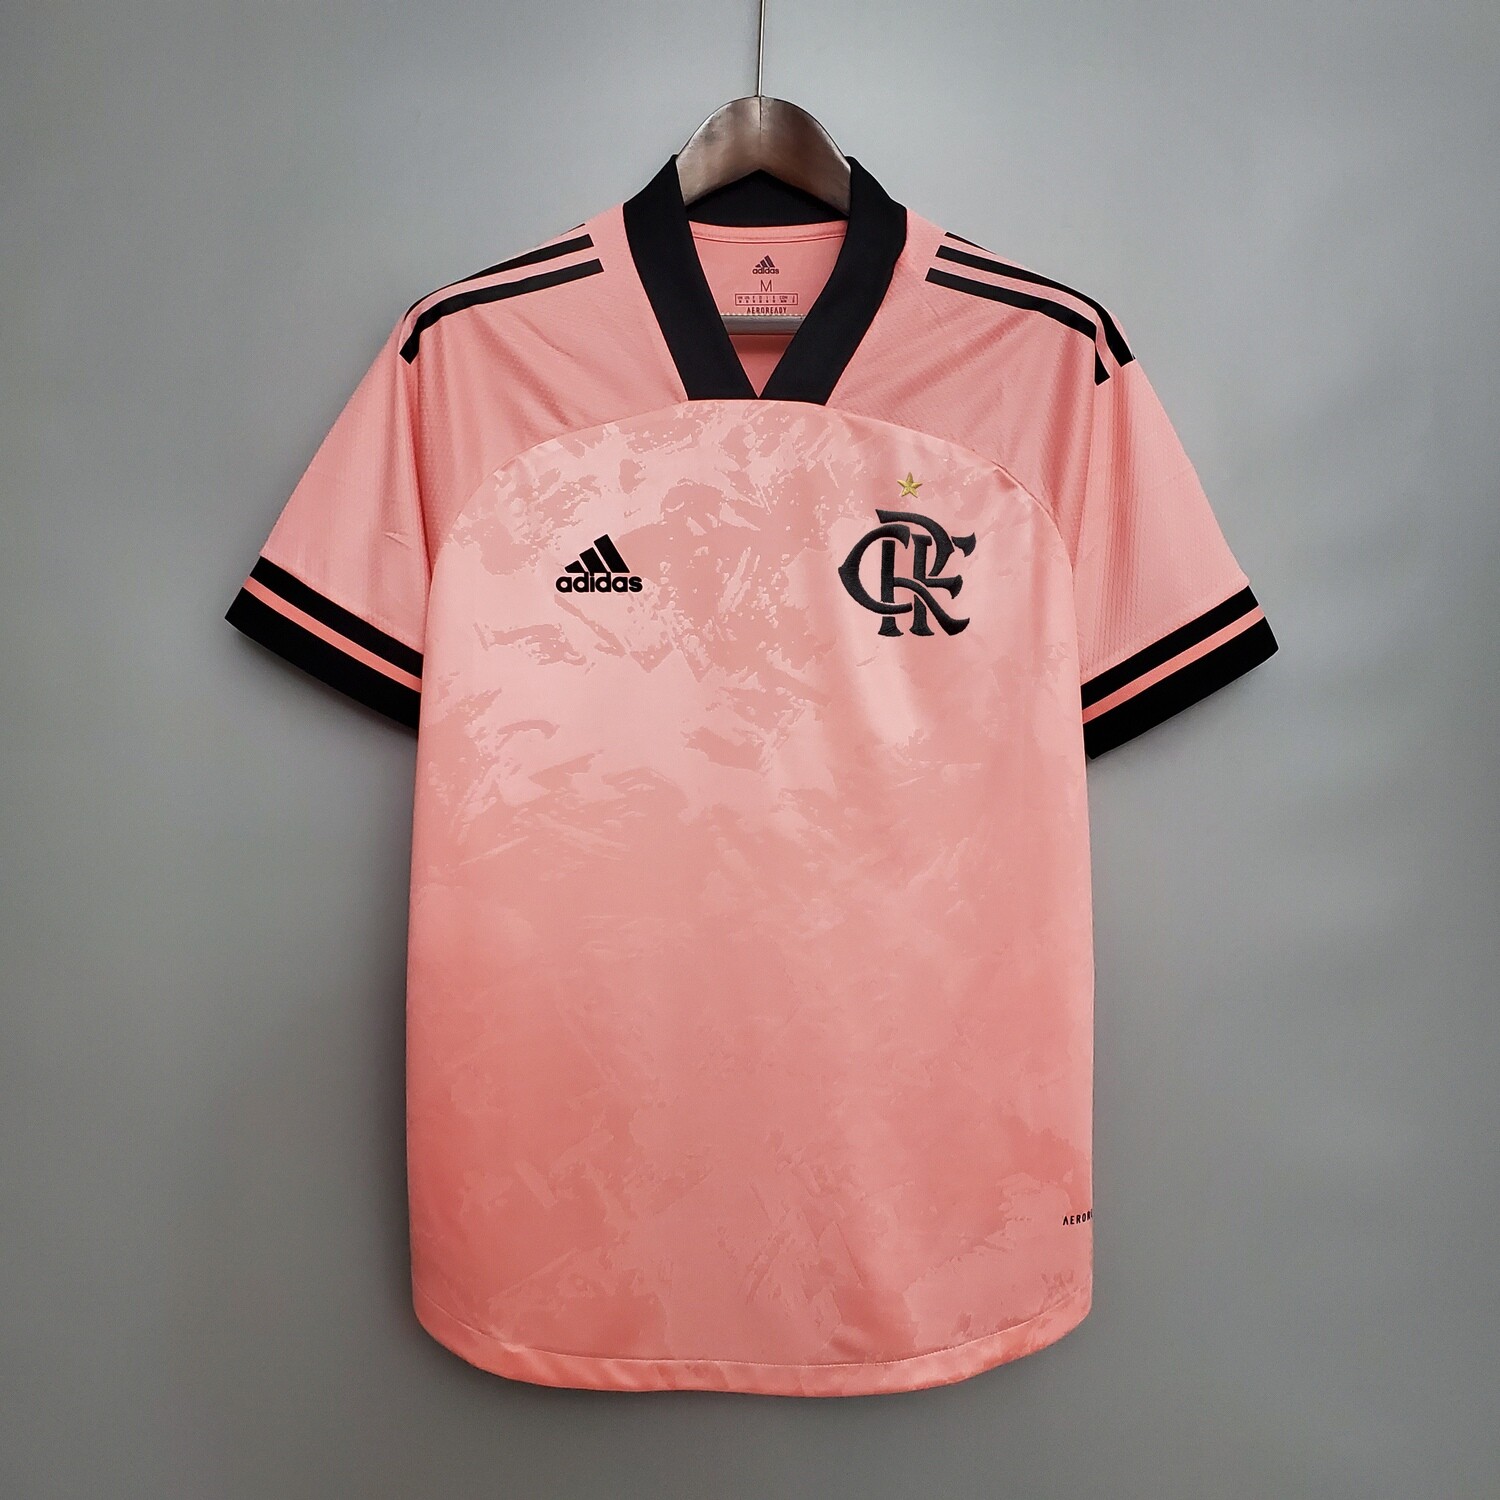 Camisa Flamengo Outubro Rosa 20/21  Torcedor Adidas Masculina - Rosa e Preto Pronta Entrega